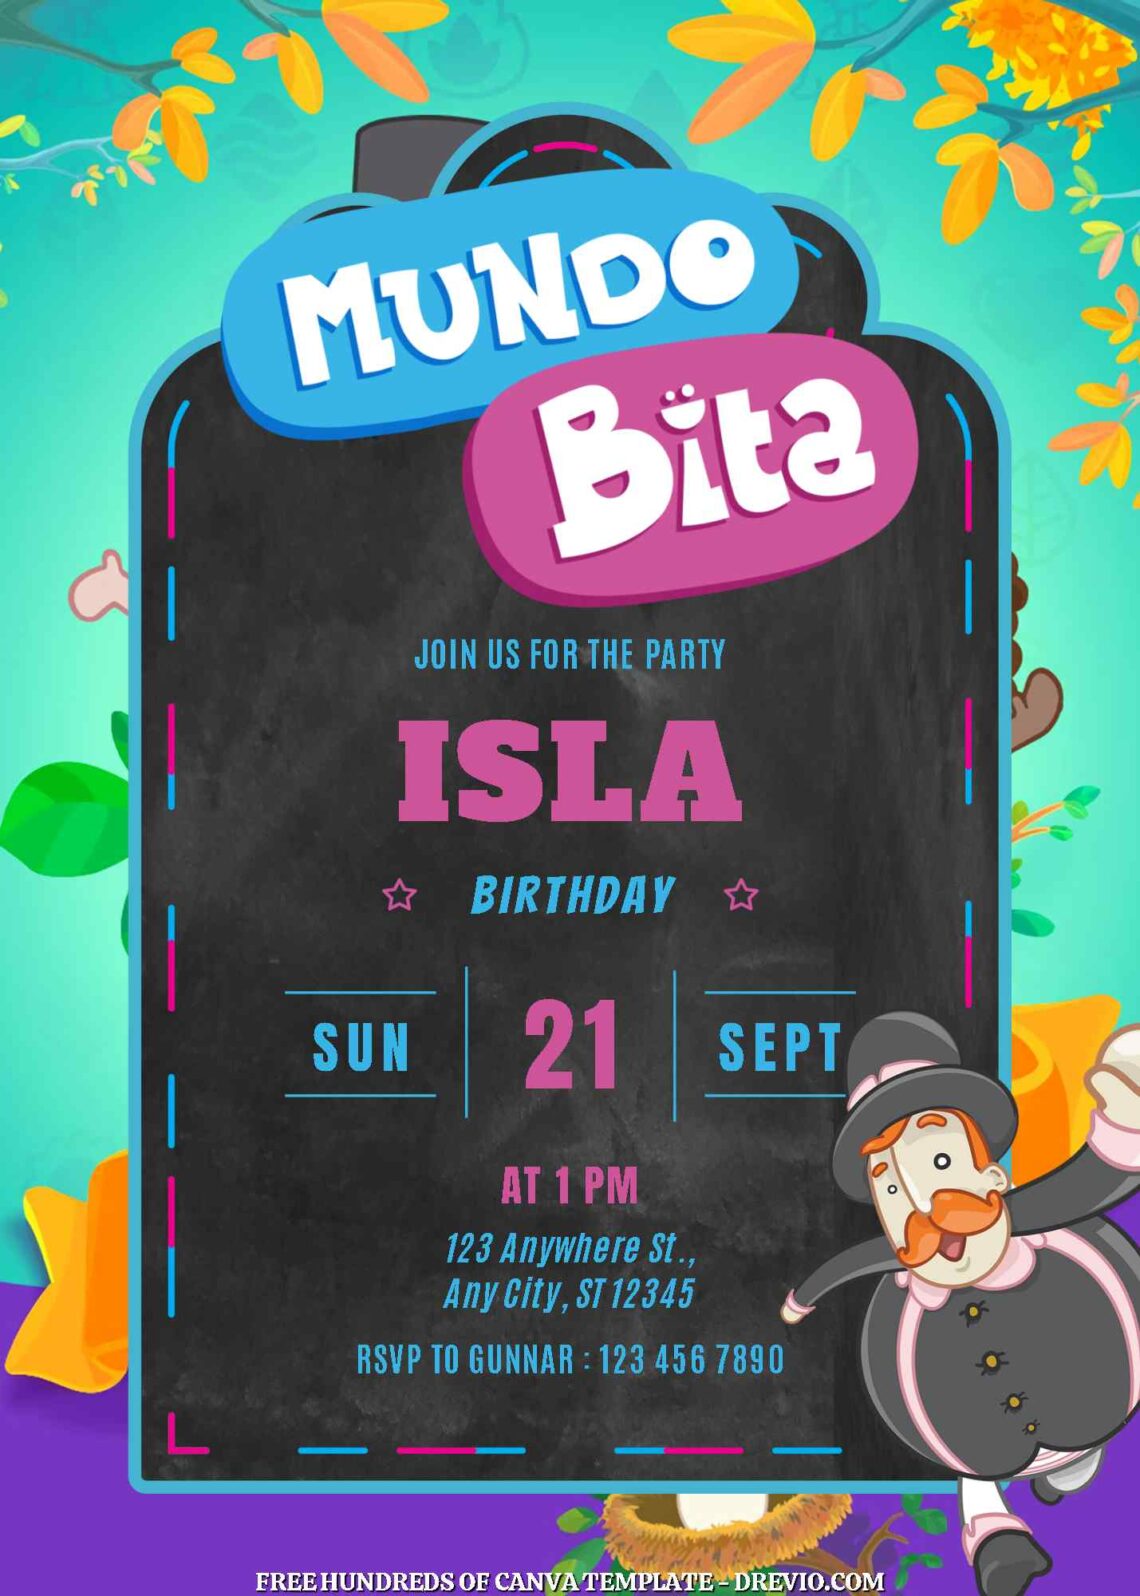 Free Mundo Bita Birthday Invitations